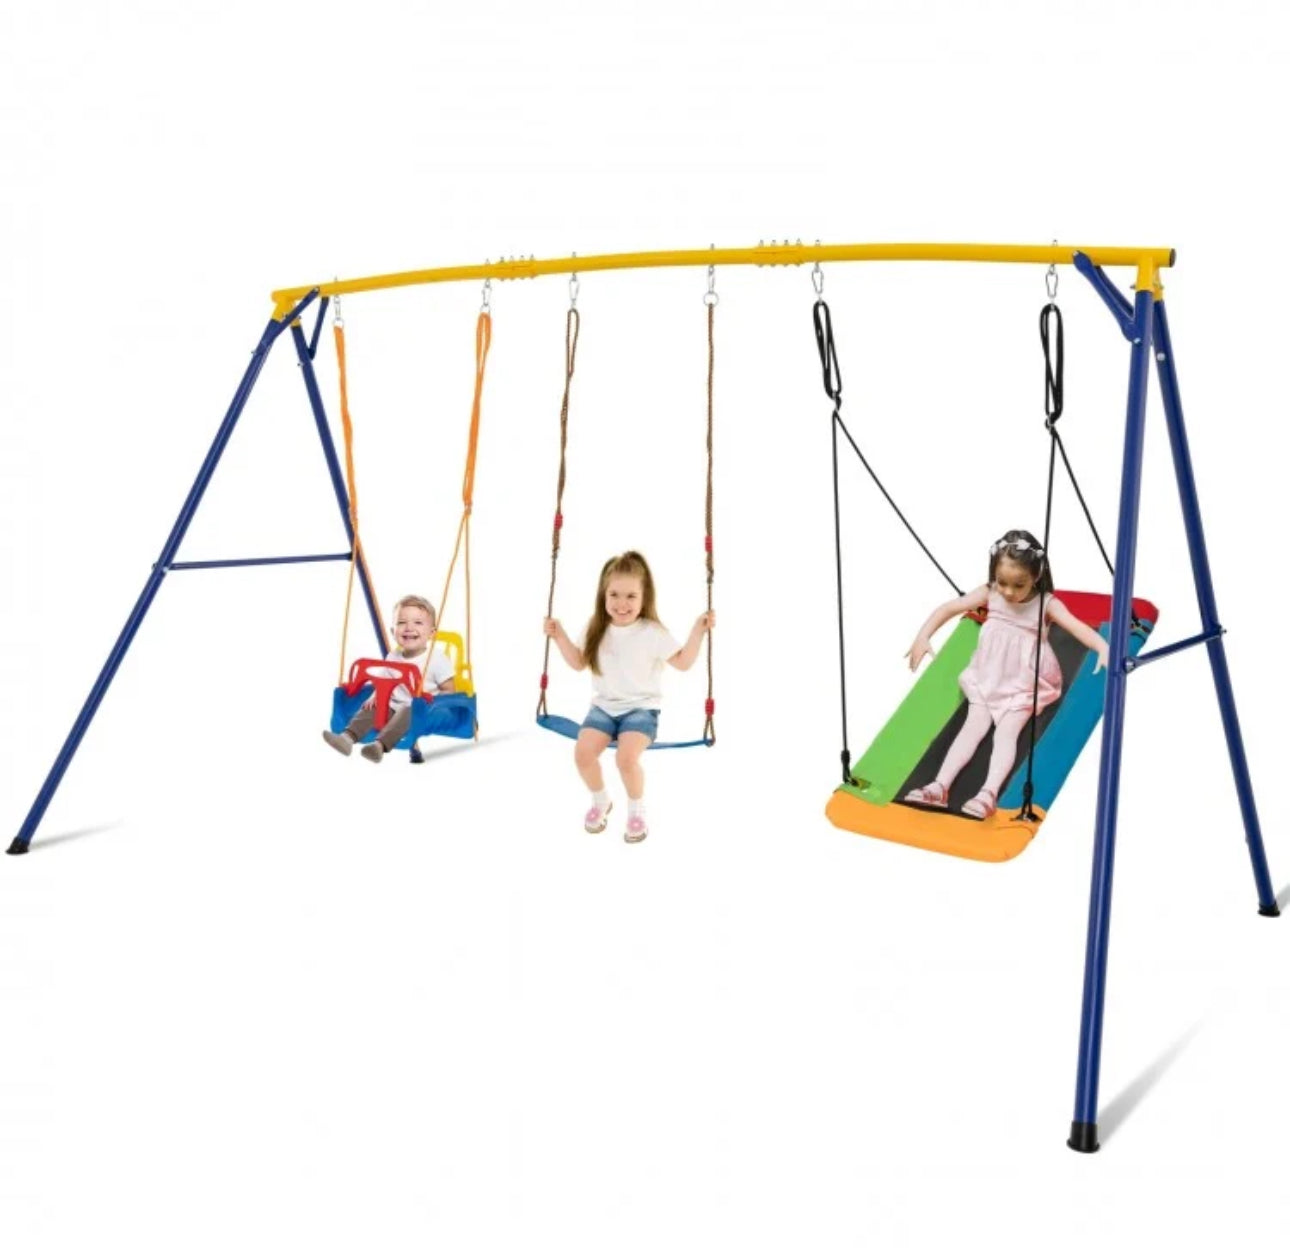 Super Fun Play Set Playground For Kids | 3 Different Swings: Belt Swing, Swing Seat, Platform Swing | Heavy Duty